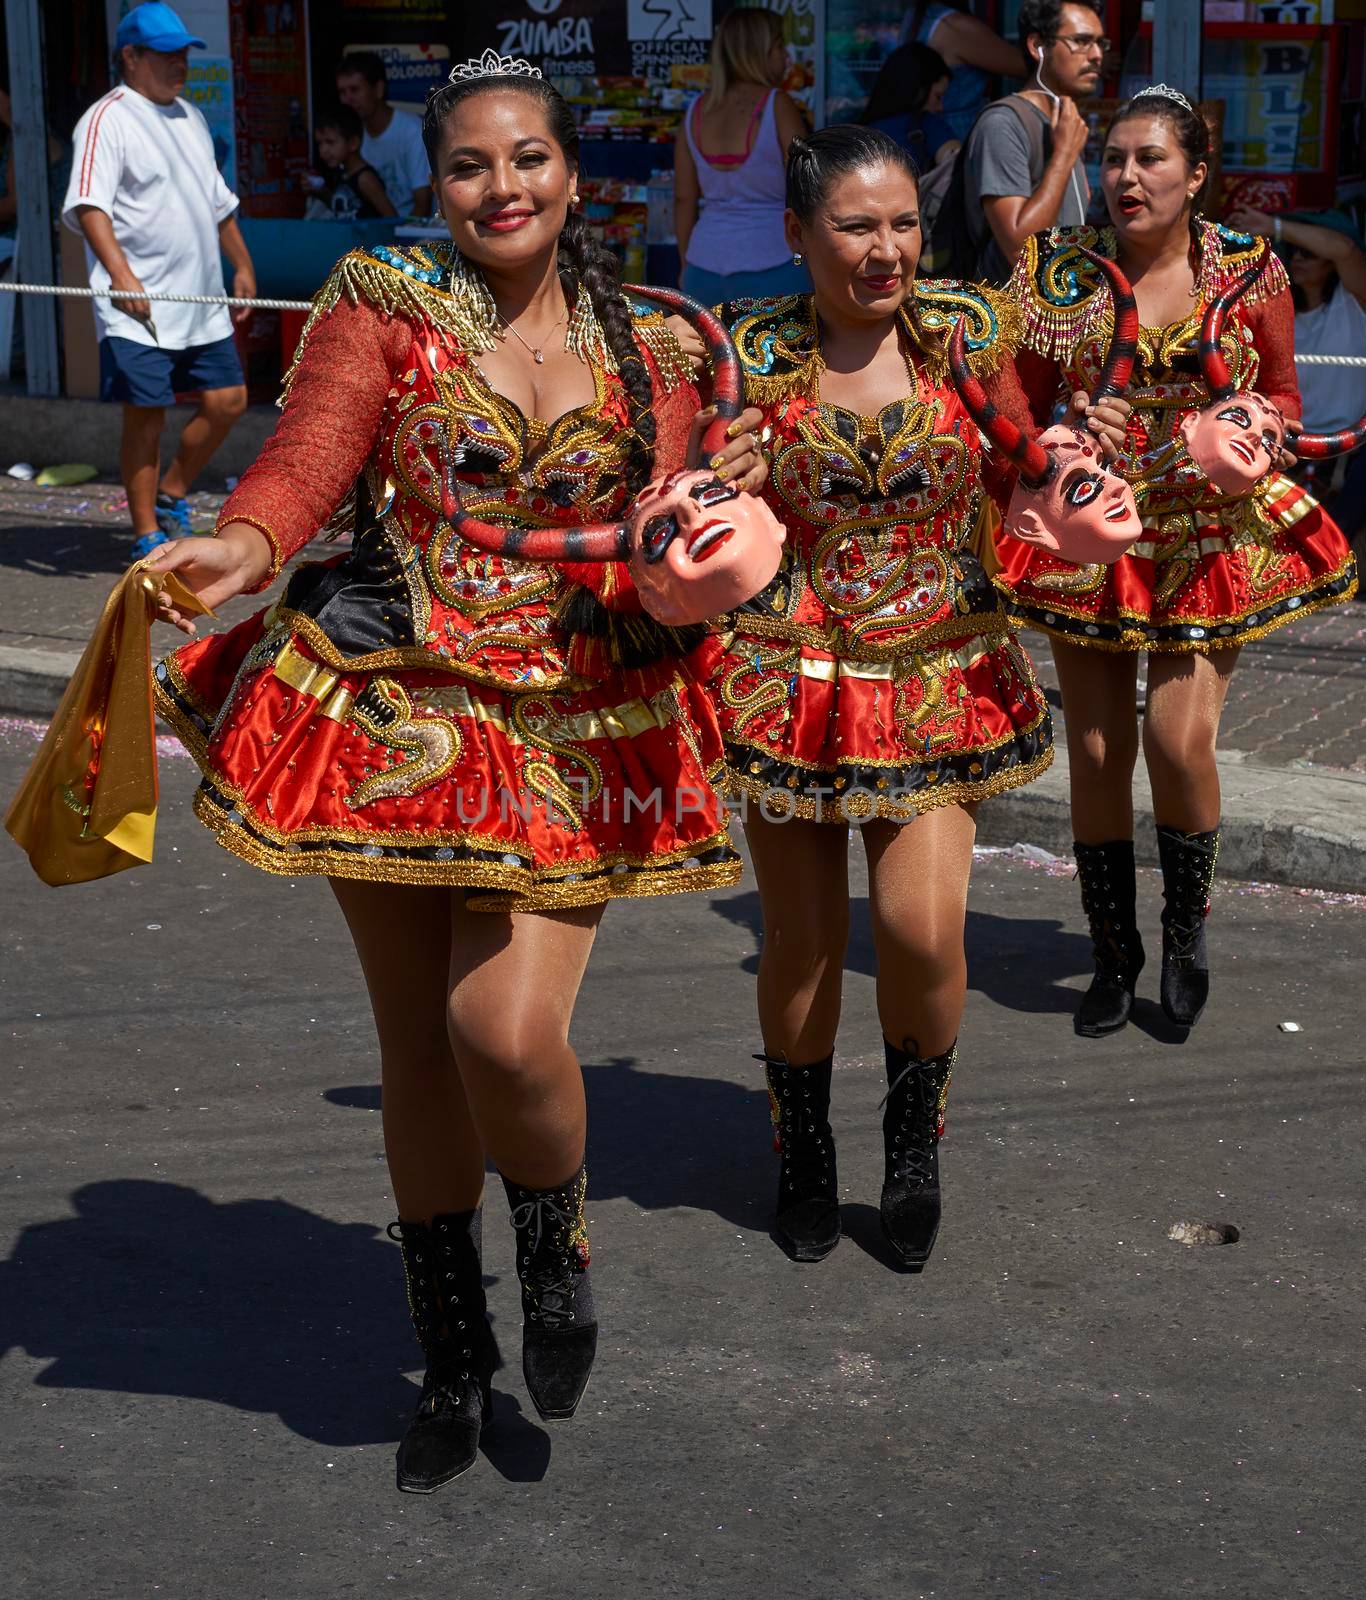 Diablada dancers at the Arica Carnival by JeremyRichards